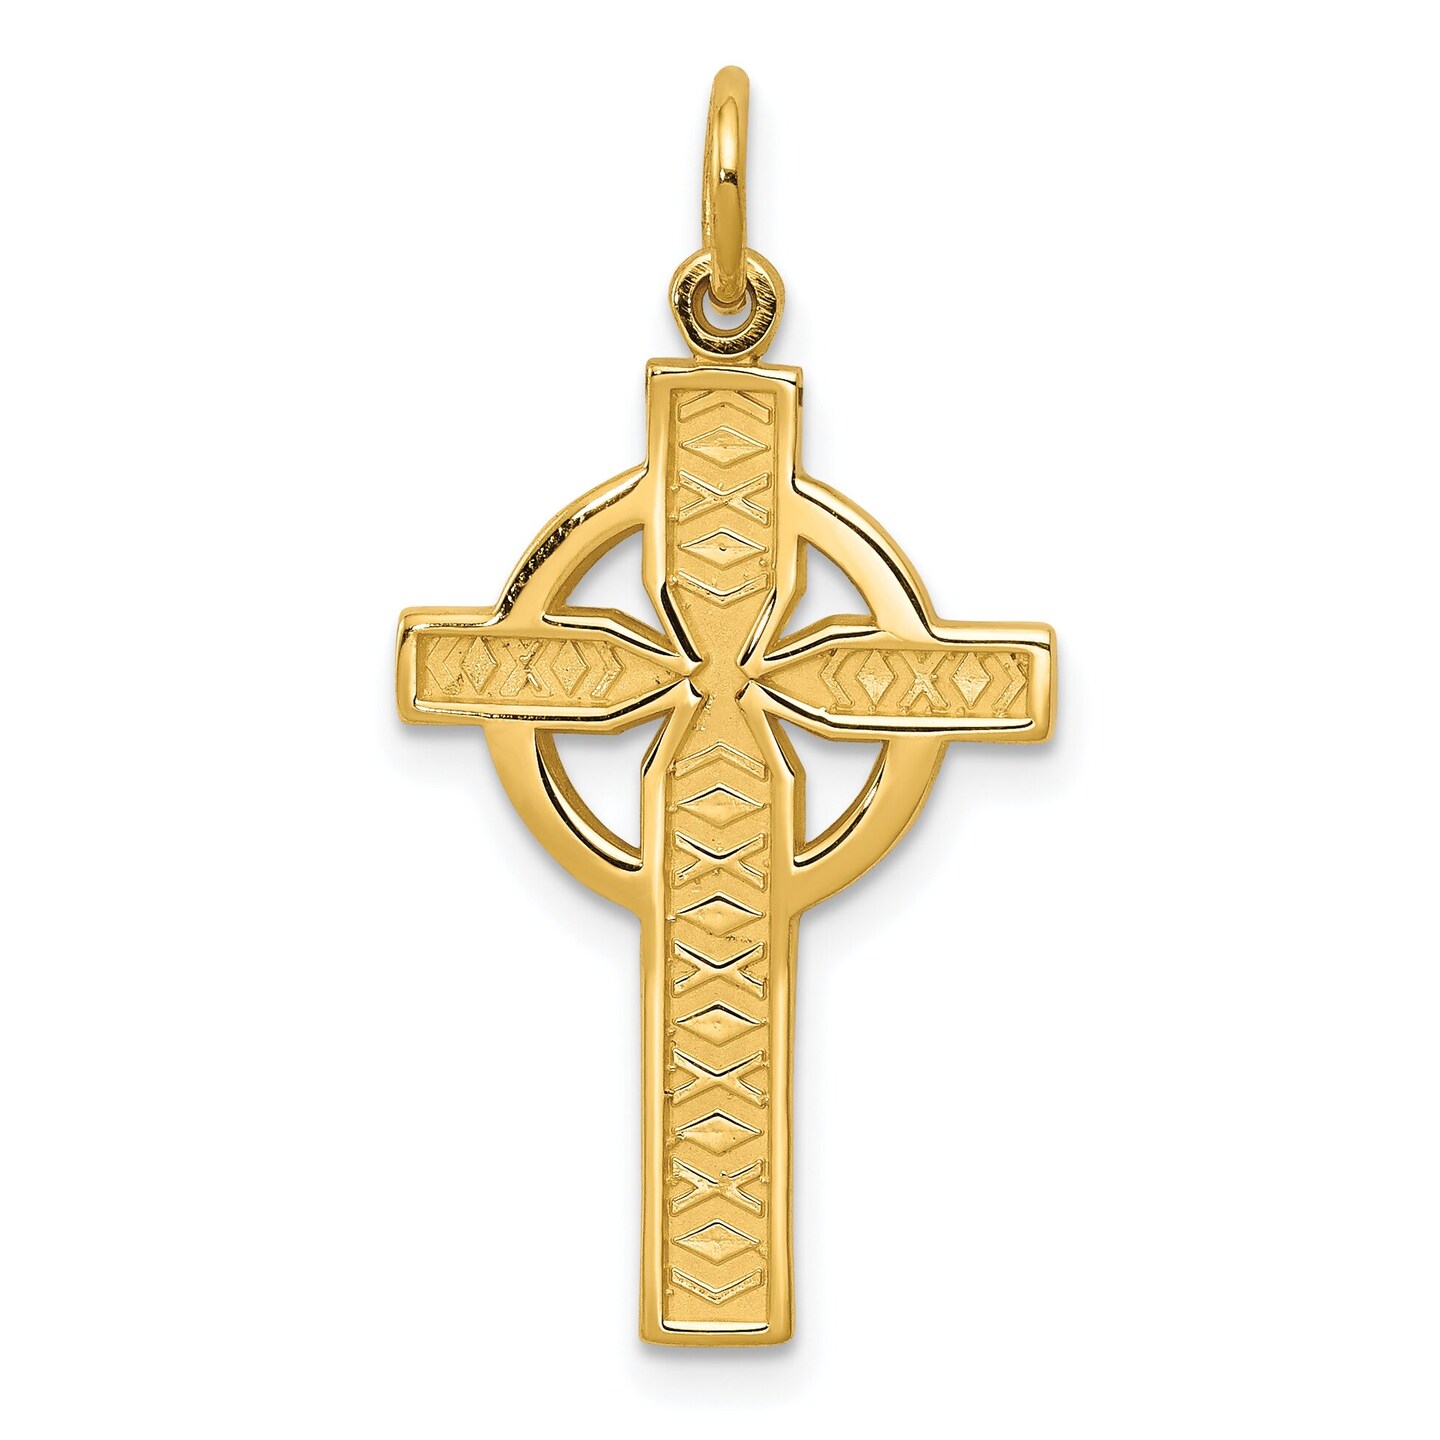 Irish 10k gold Celtic Cross Pendant 2.6 gm | eBay